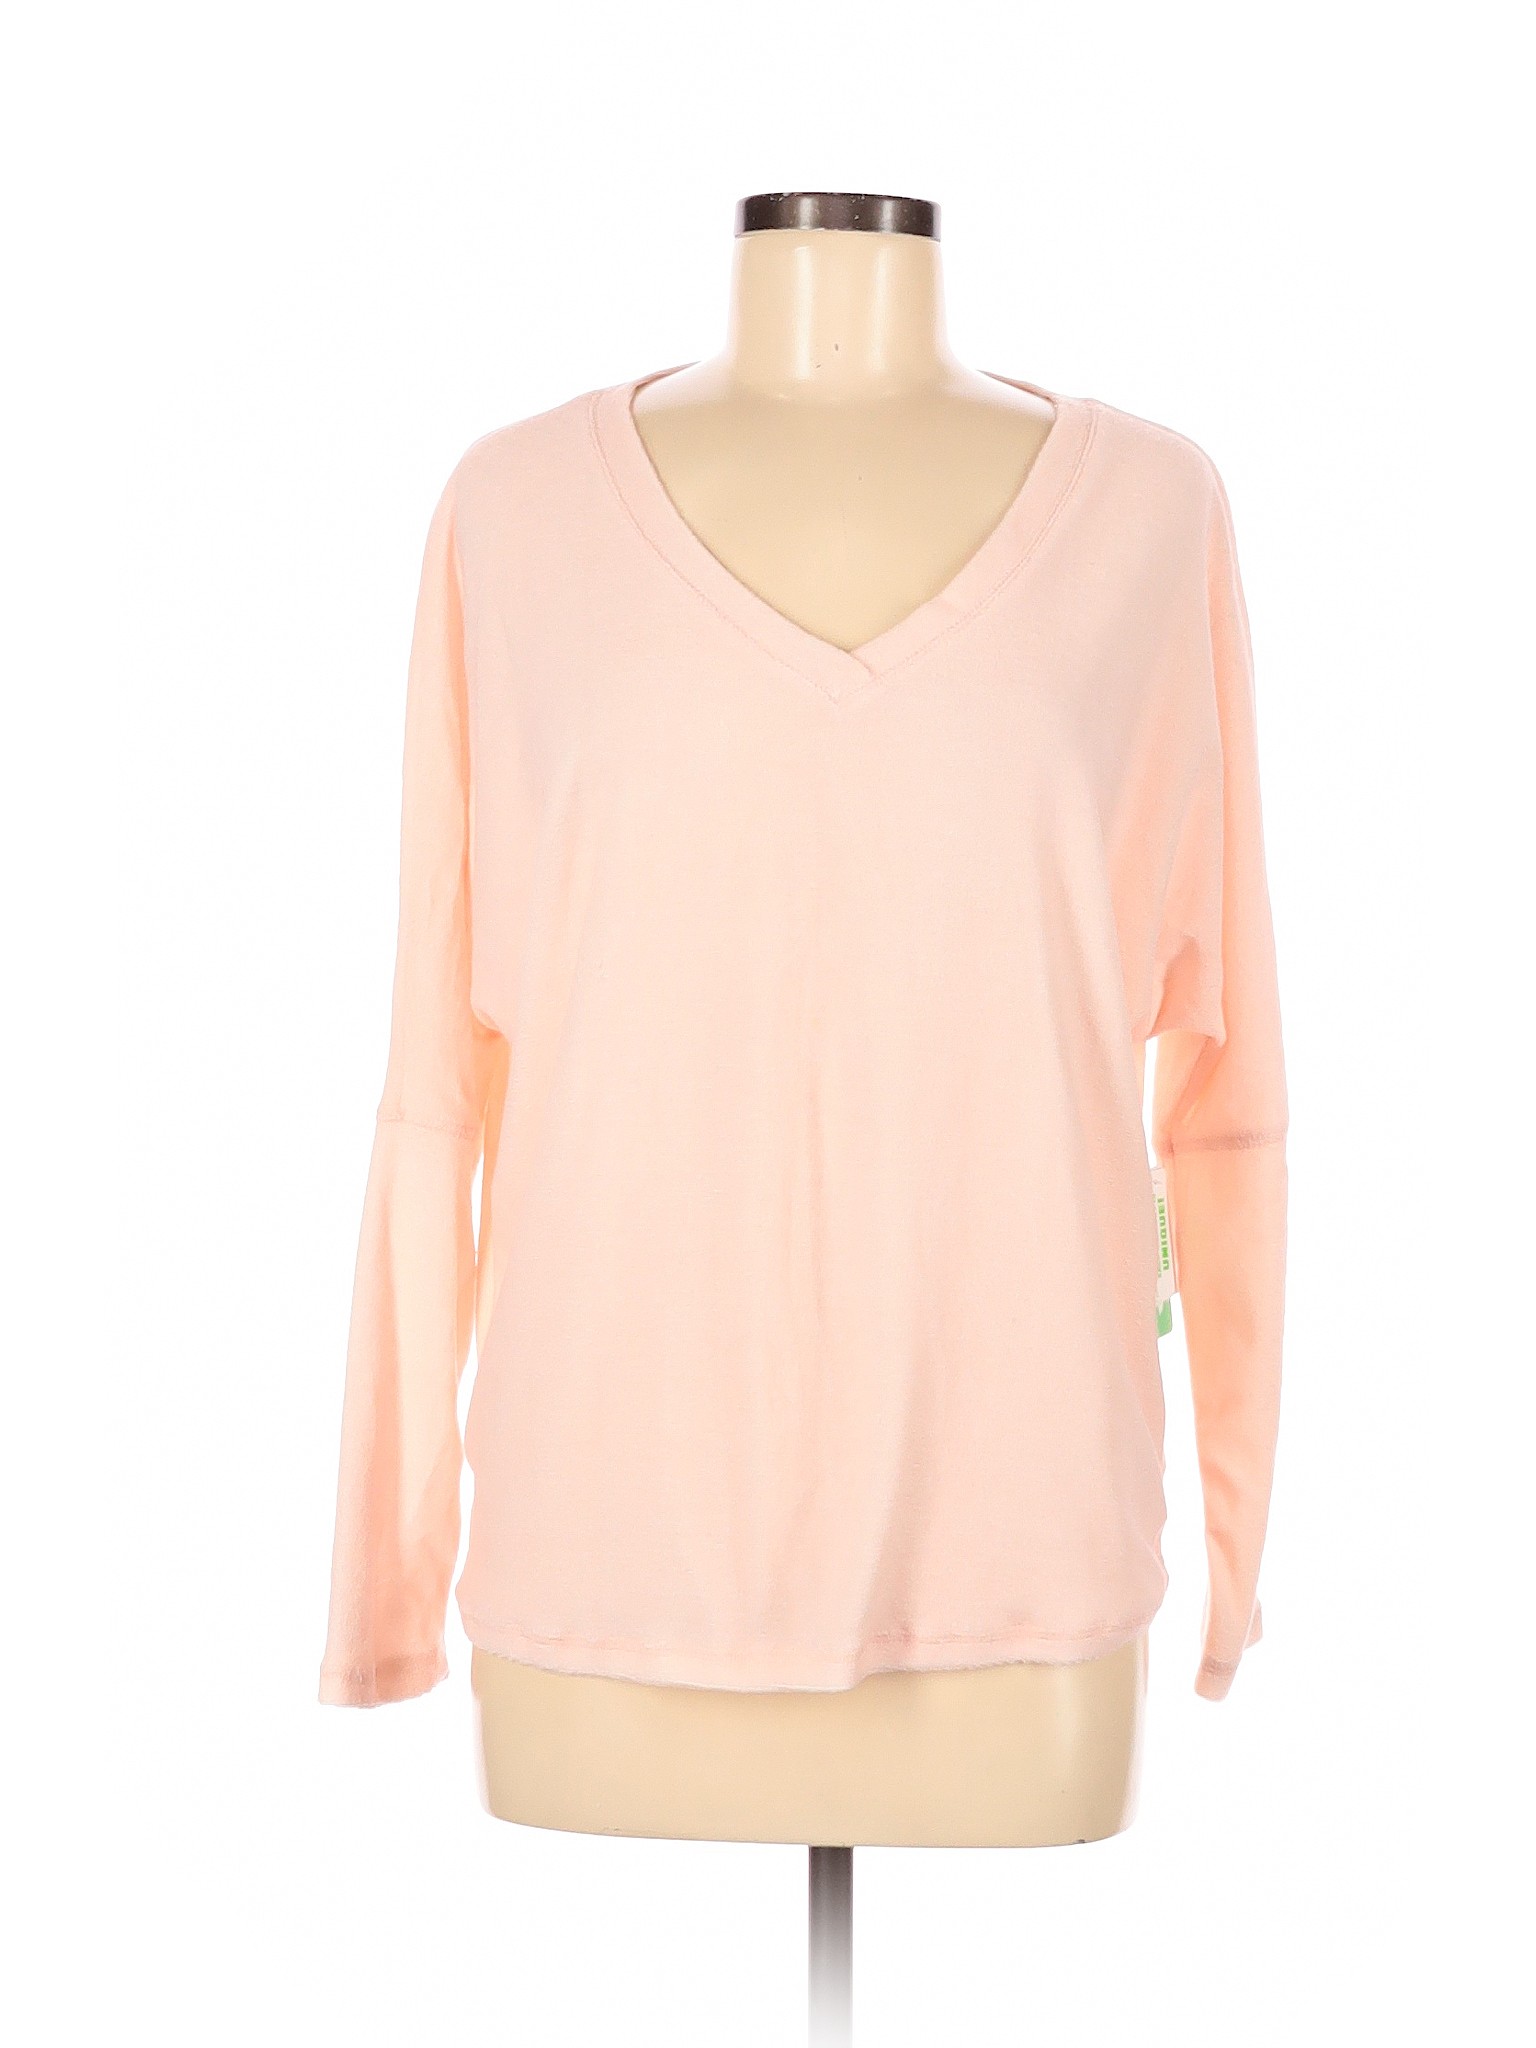 NWT Honeydew Women Pink Pullover Sweater M | eBay